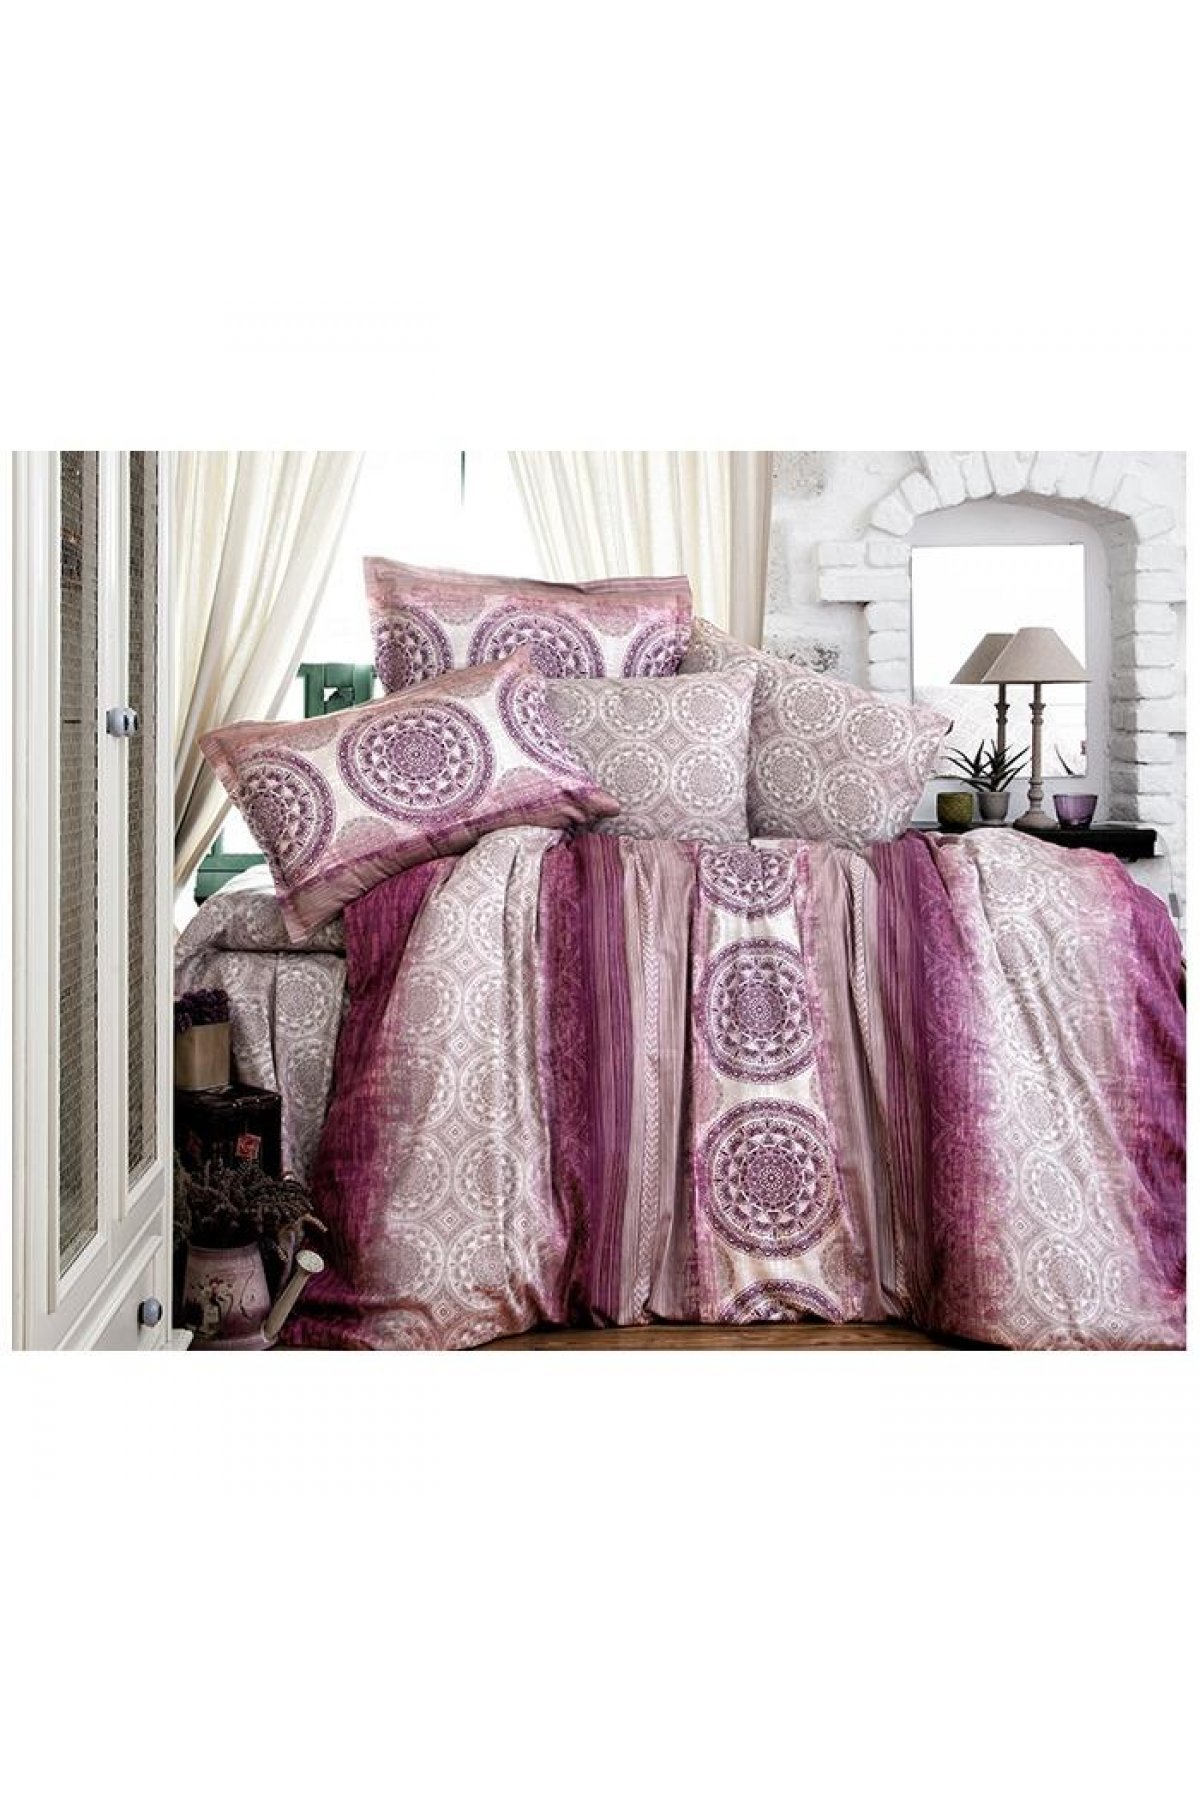 Bedding-Light Purple